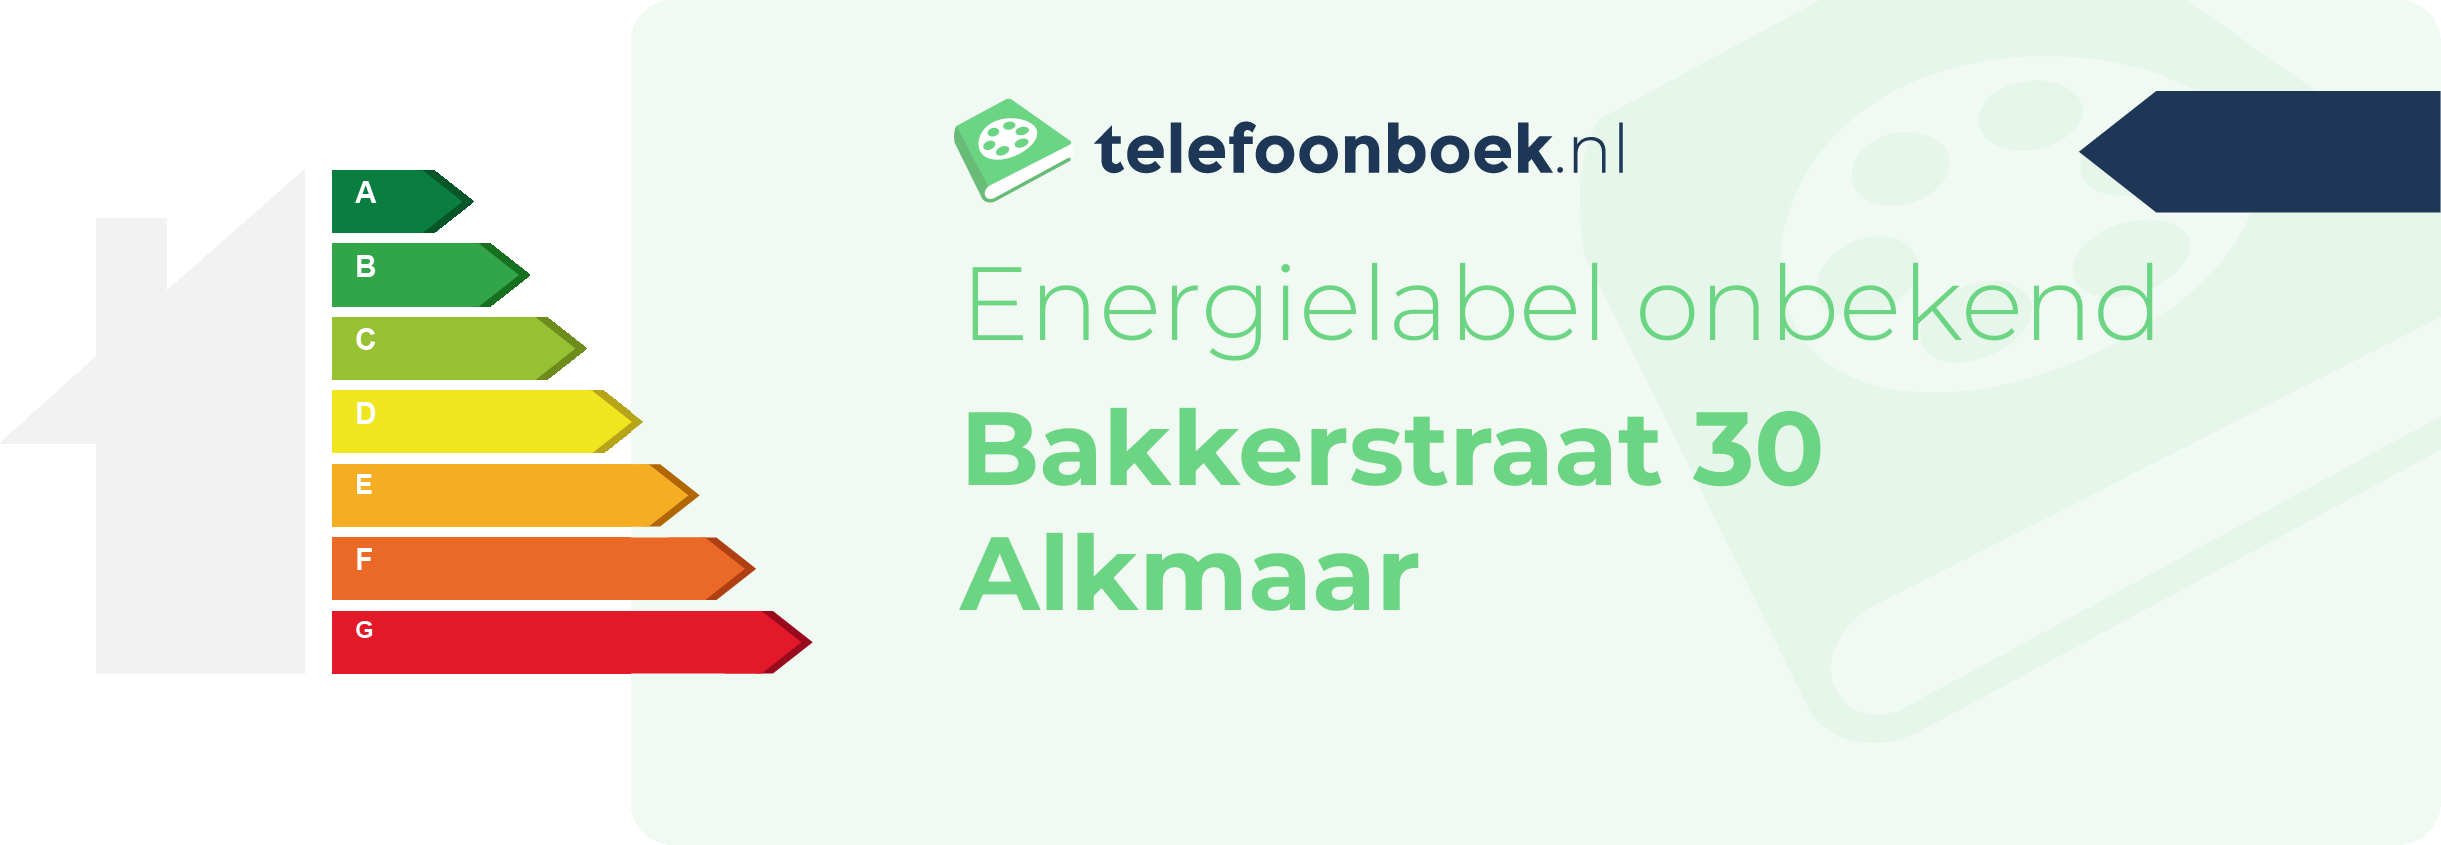 Energielabel Bakkerstraat 30 Alkmaar